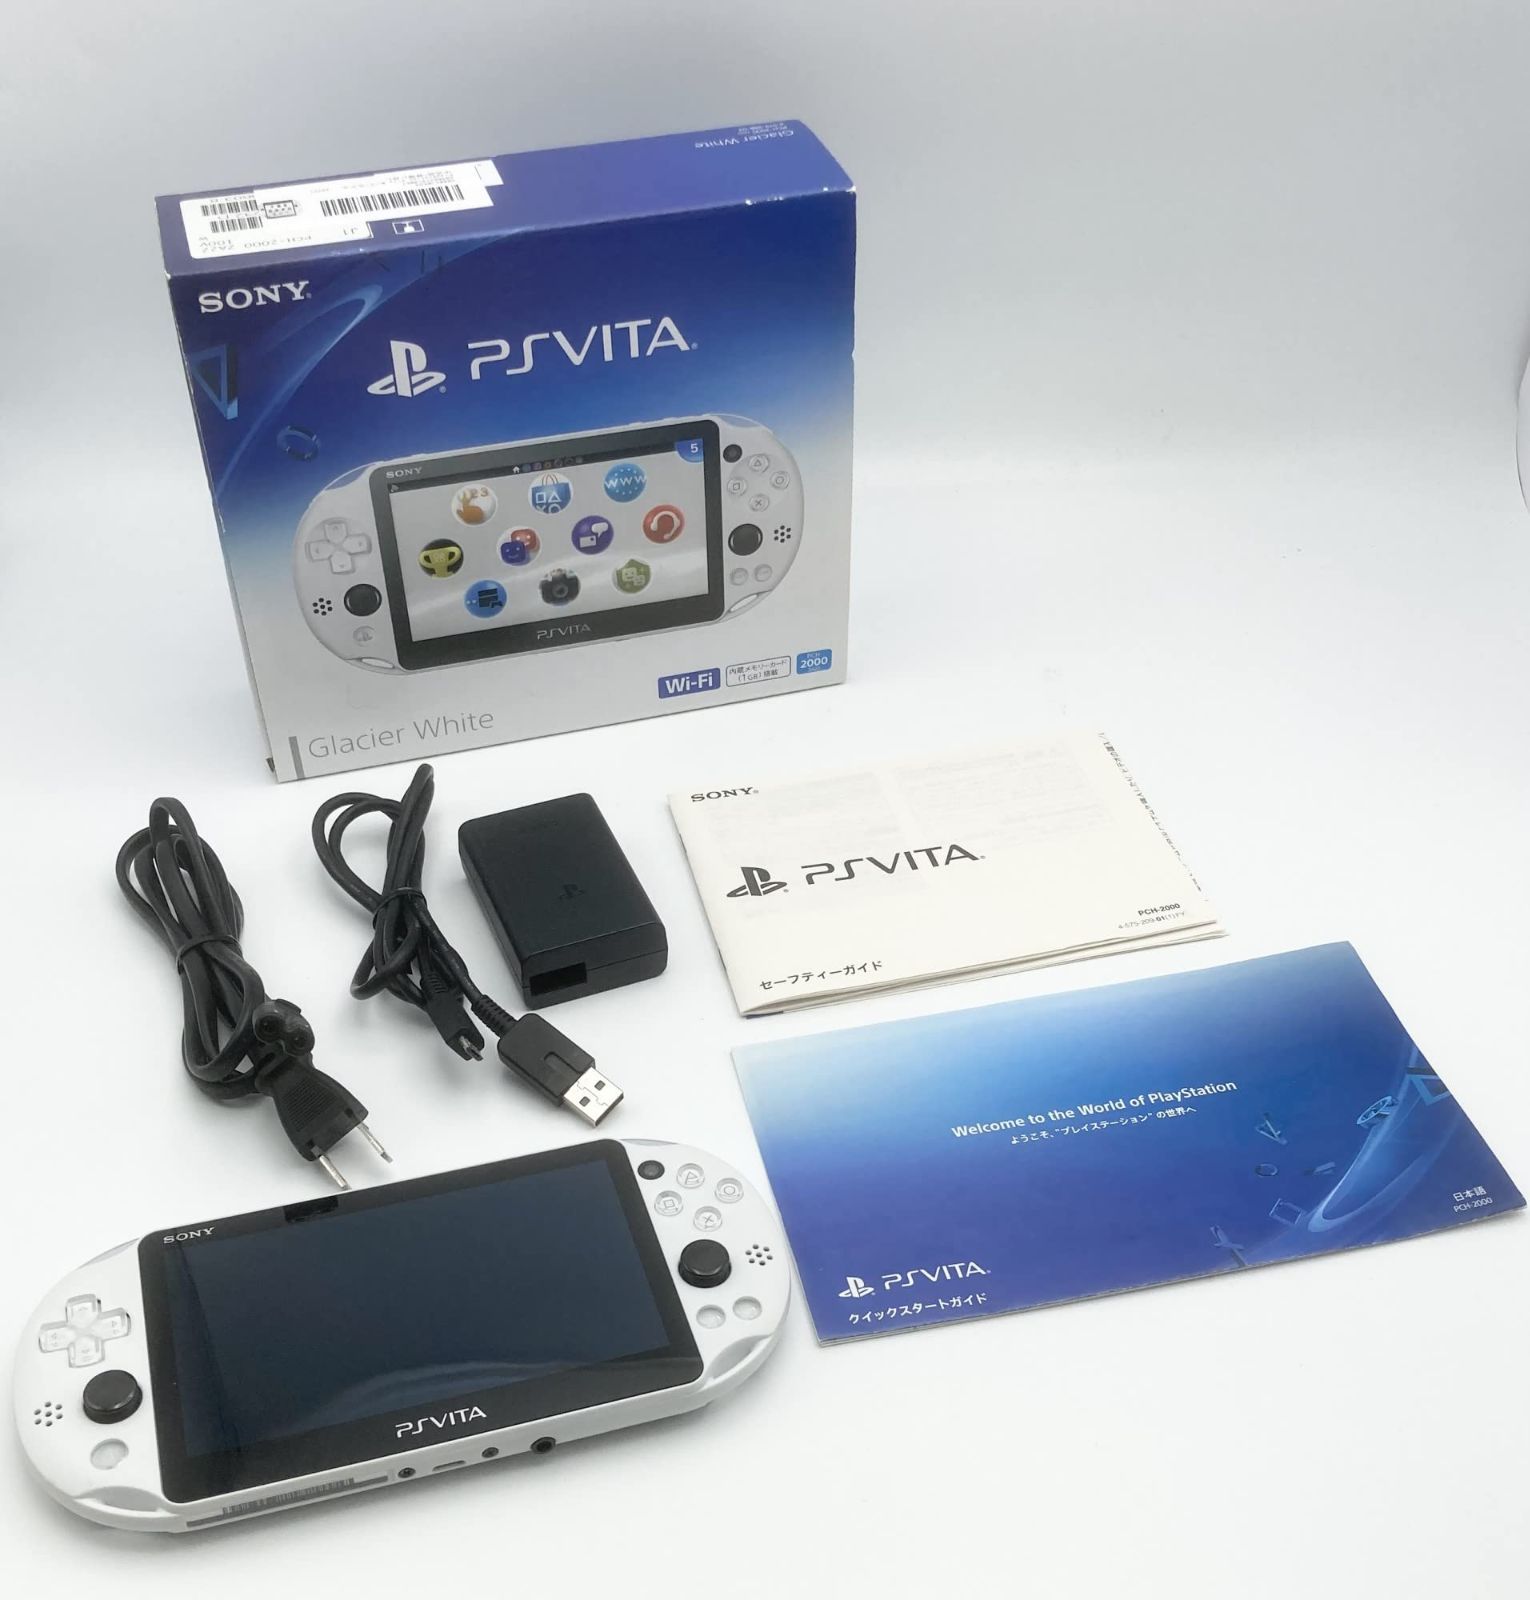 SONY ソニー PlayStation Vita Starter Kit